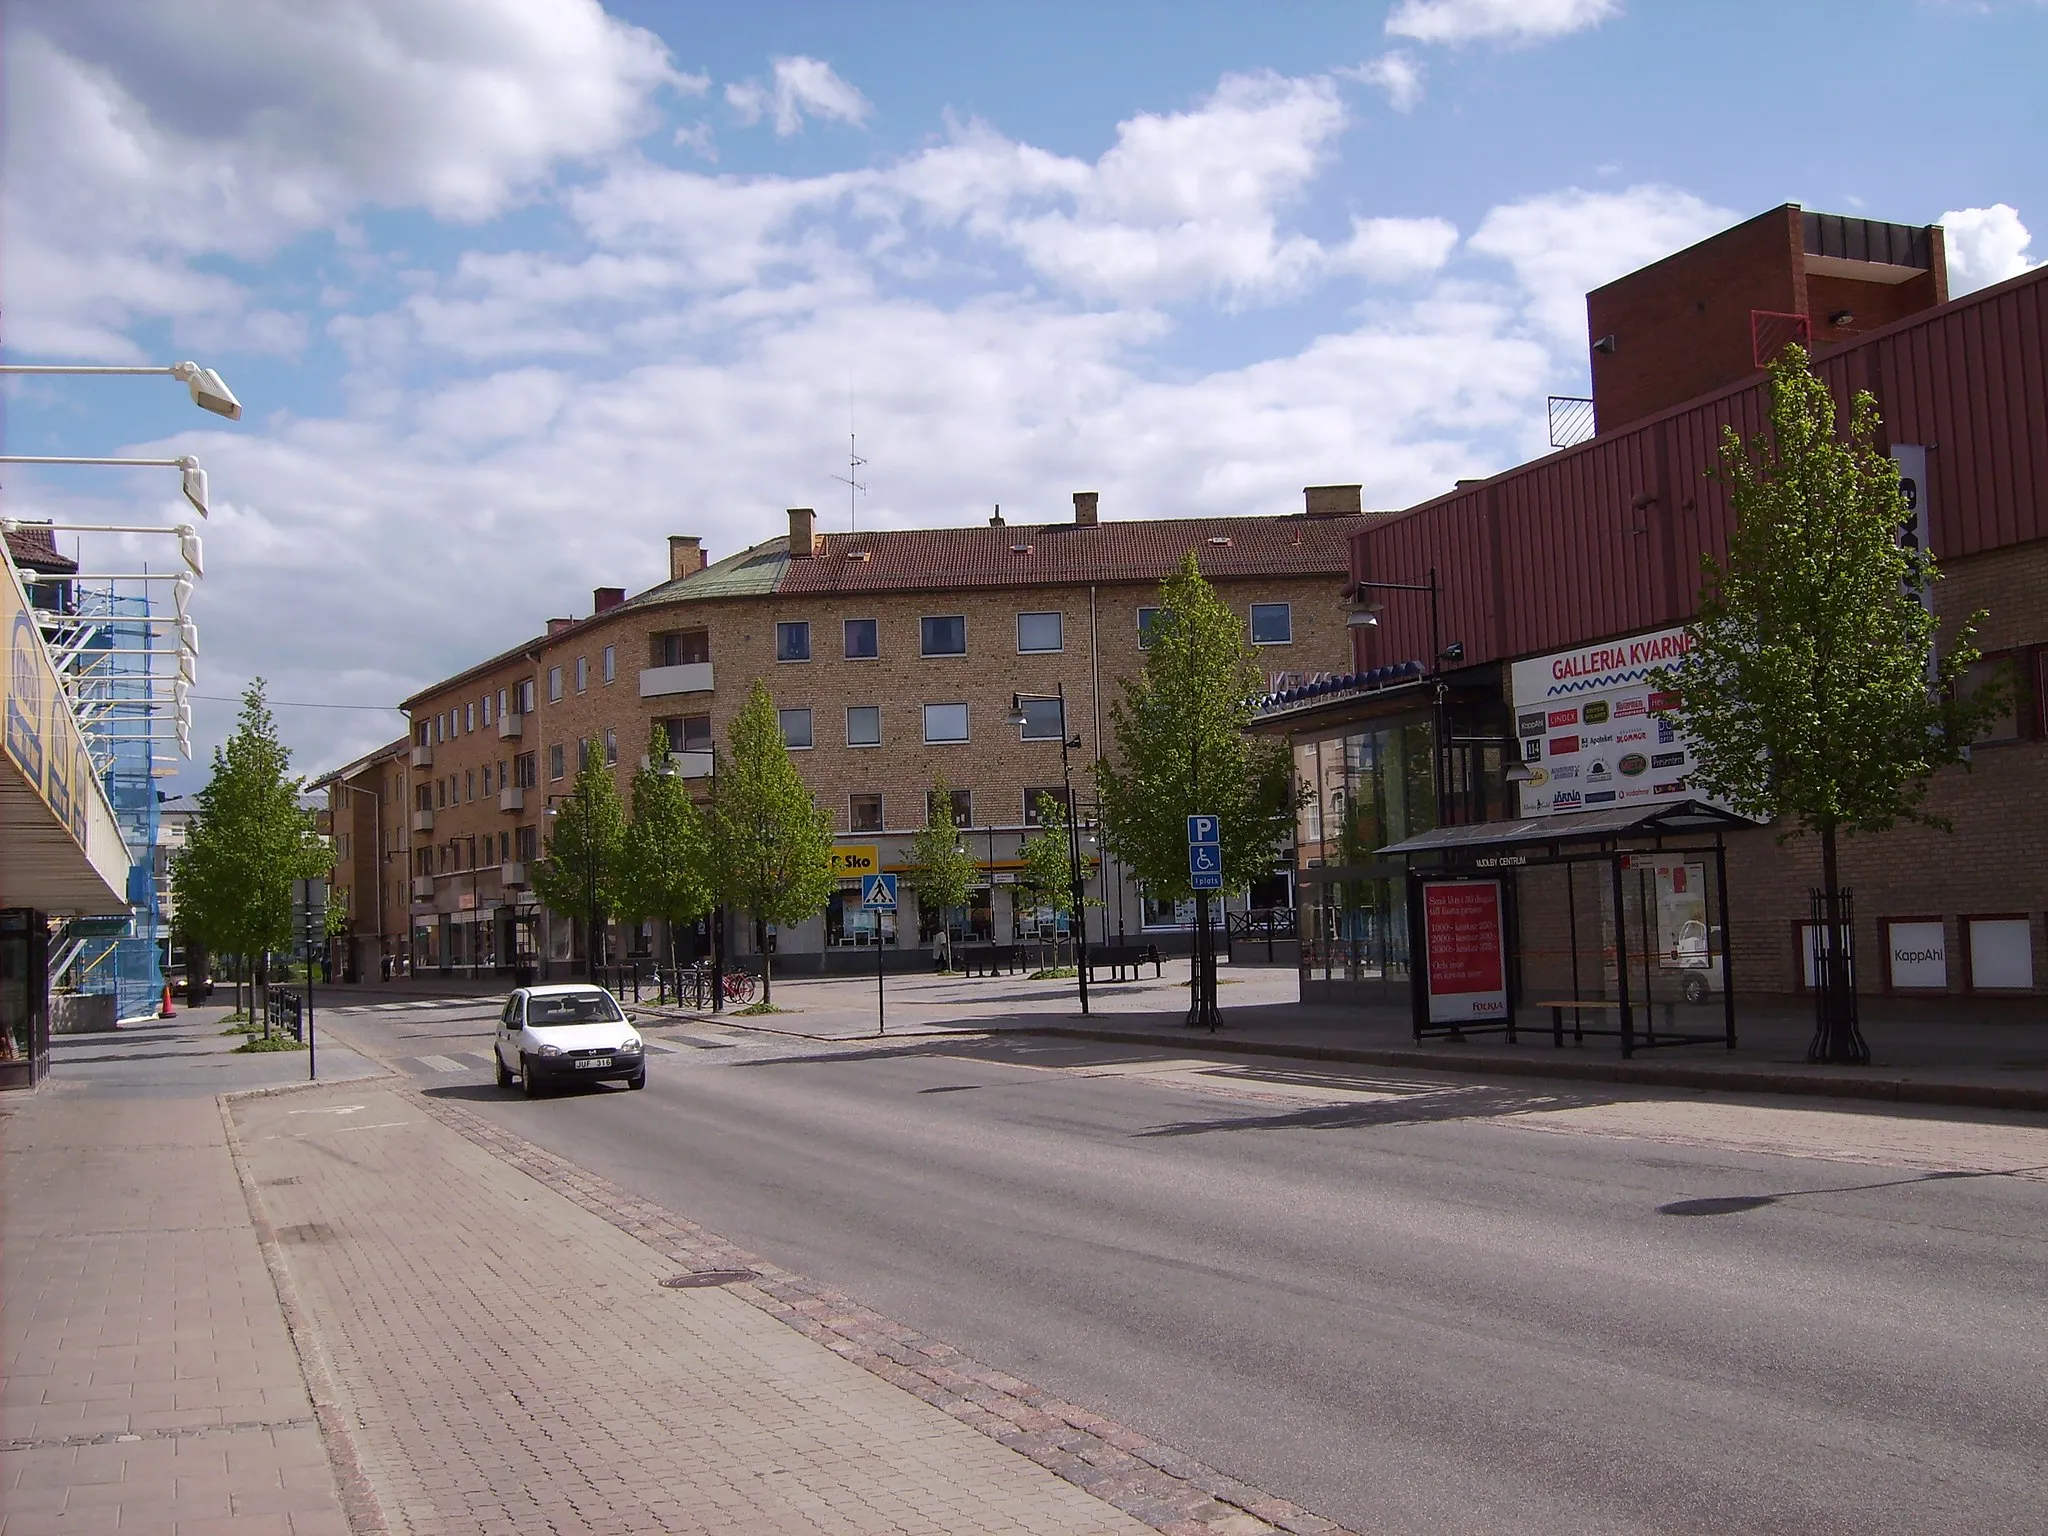 Photo showing: The main street – Kungsvägen - in Mjölby.